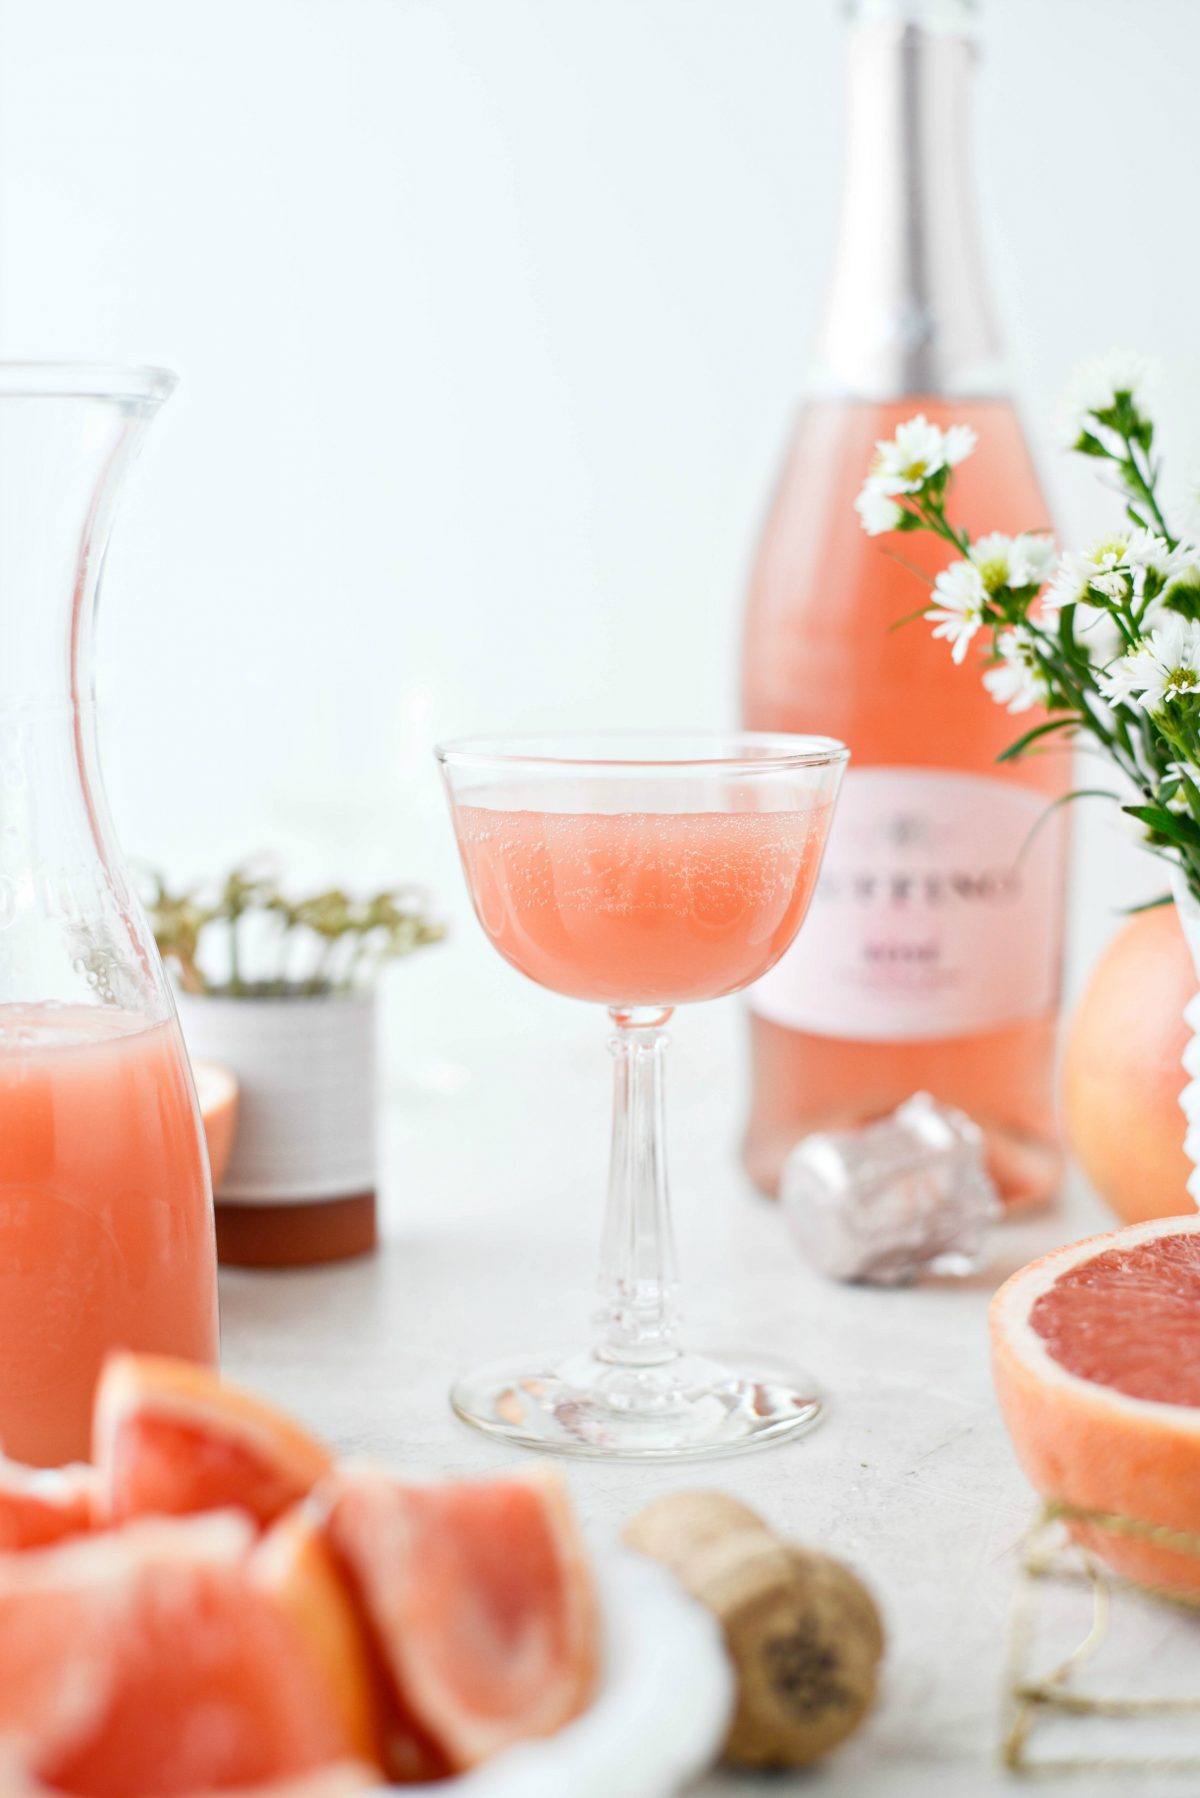 grepfrut Rosa Xtrasex Mimosas l SimplyScratch.com # adult # beverage # grapefruit # rose # mimosa # easter # brunch # mothersday